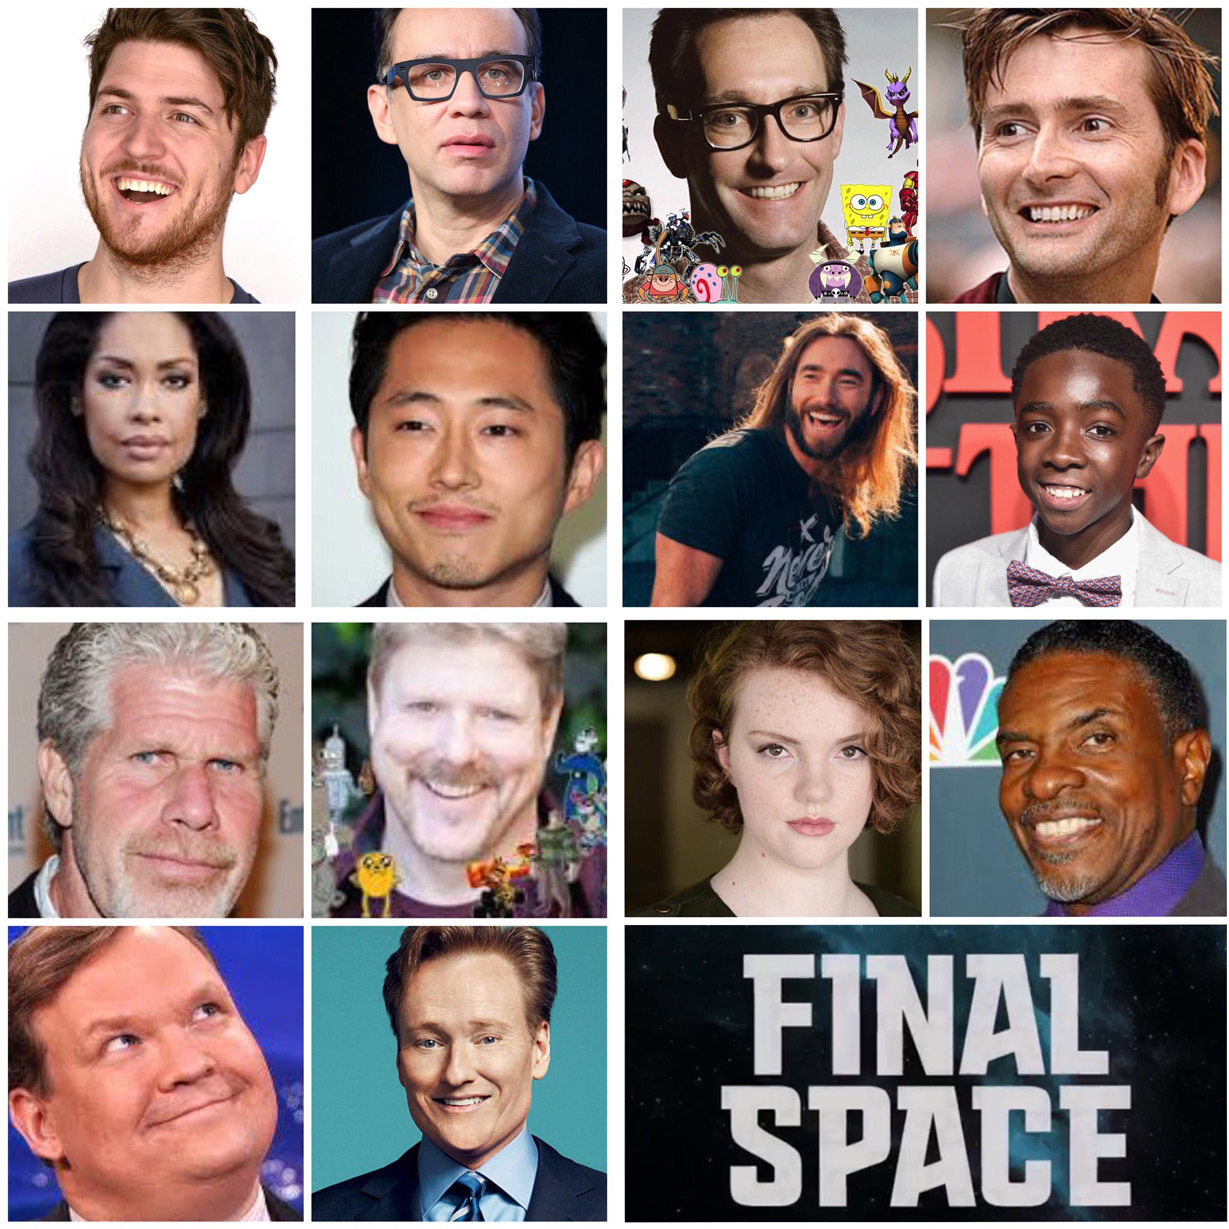 Final Space cast announcement (TBS)